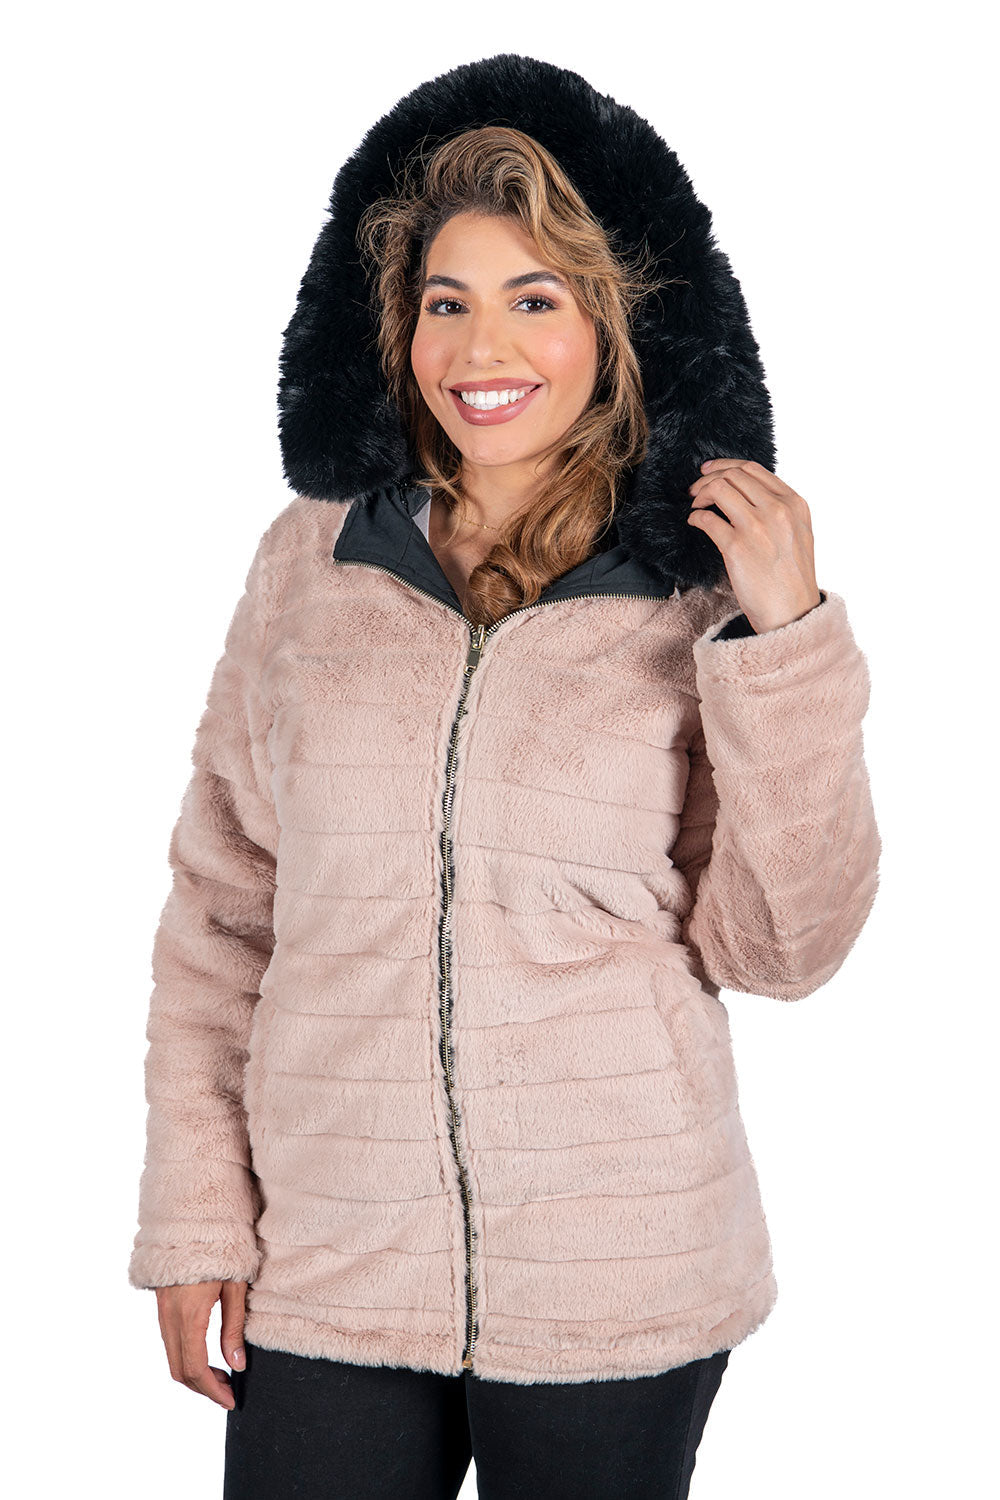 Women's Reversible Faux Fur Hooded Jackets (S-M-L-XL / 3-6-6-3) 18 pcs